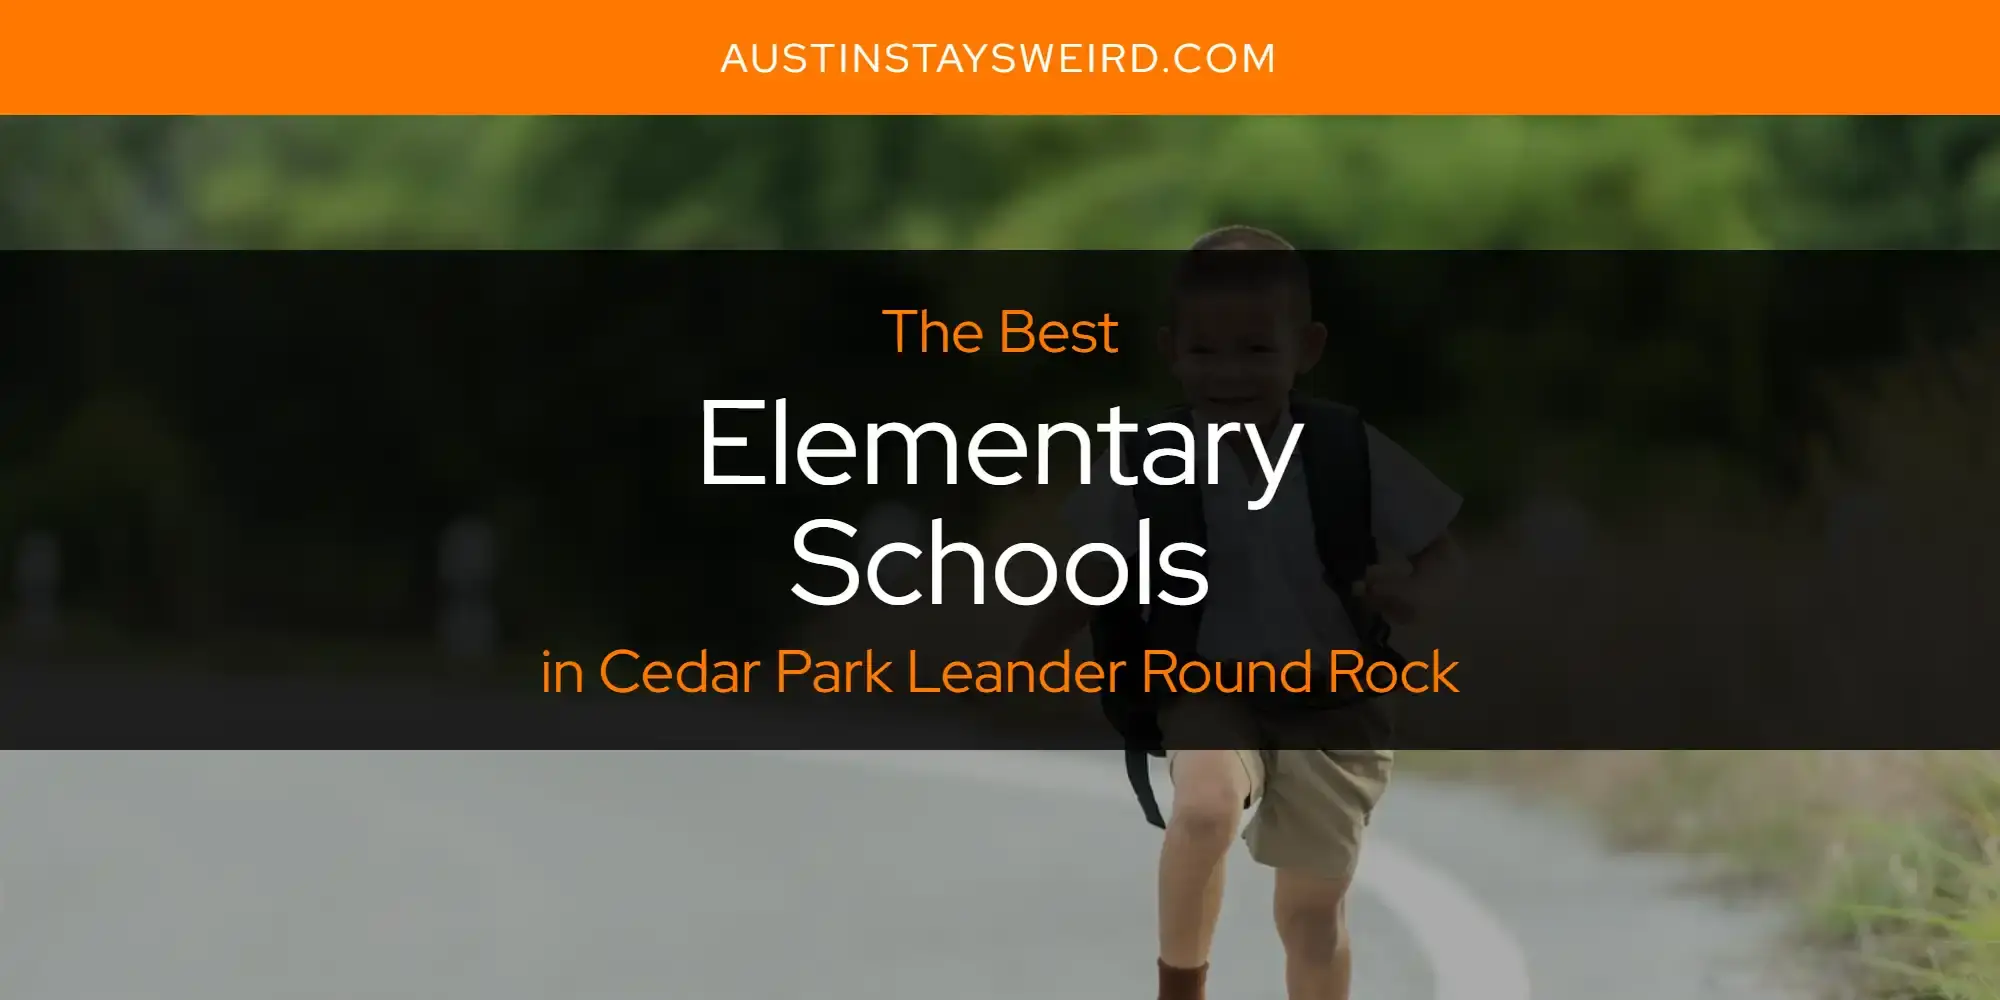 Best Elementary Schools in Cedar Park Leander Round Rock? Here's the Top 8